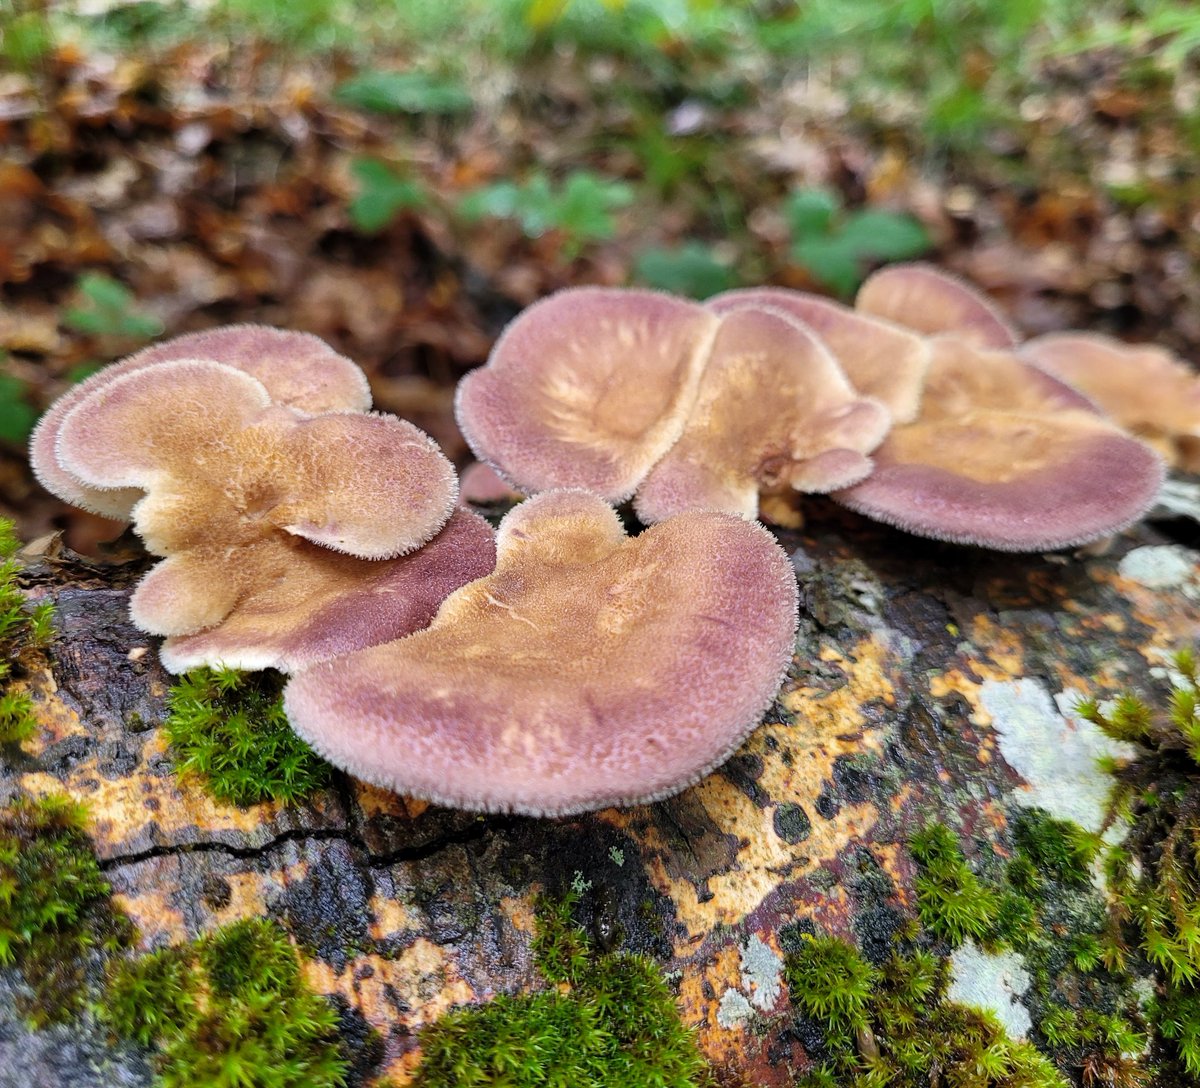 Panus neostrigosus. 

🚫Not edible🚫

#fungi #mushrooms  #nature #NaturePhotography
#mycology
#mushroomtwitter